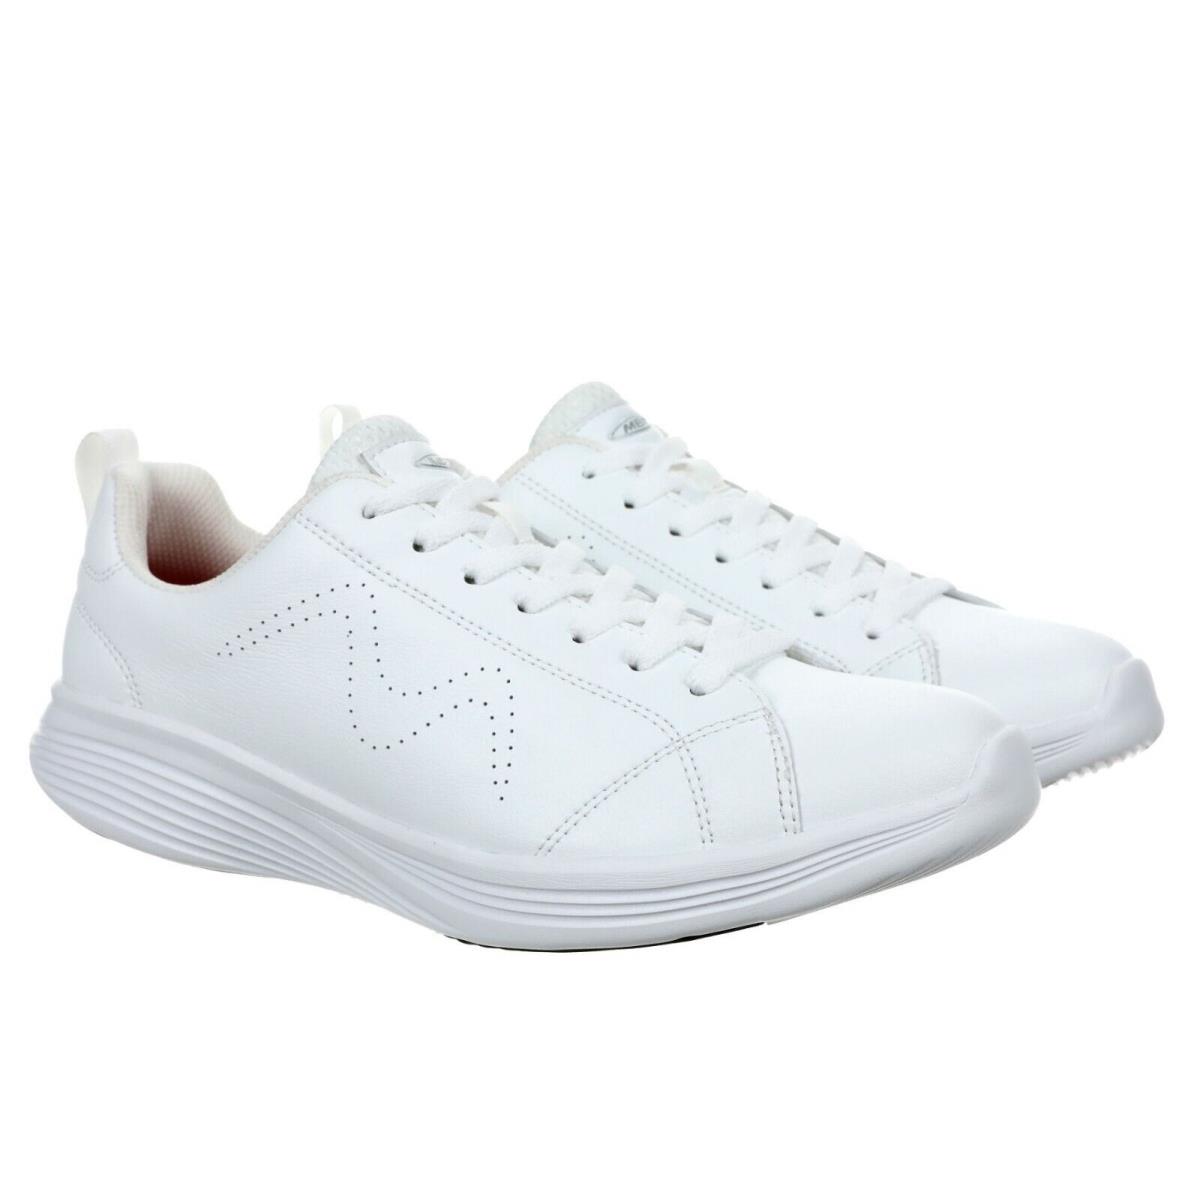 Mbt Ren Men`s Walking Shoe Ultra-light Comfort Leather Upper 2 Colors WHITE-702758-16L